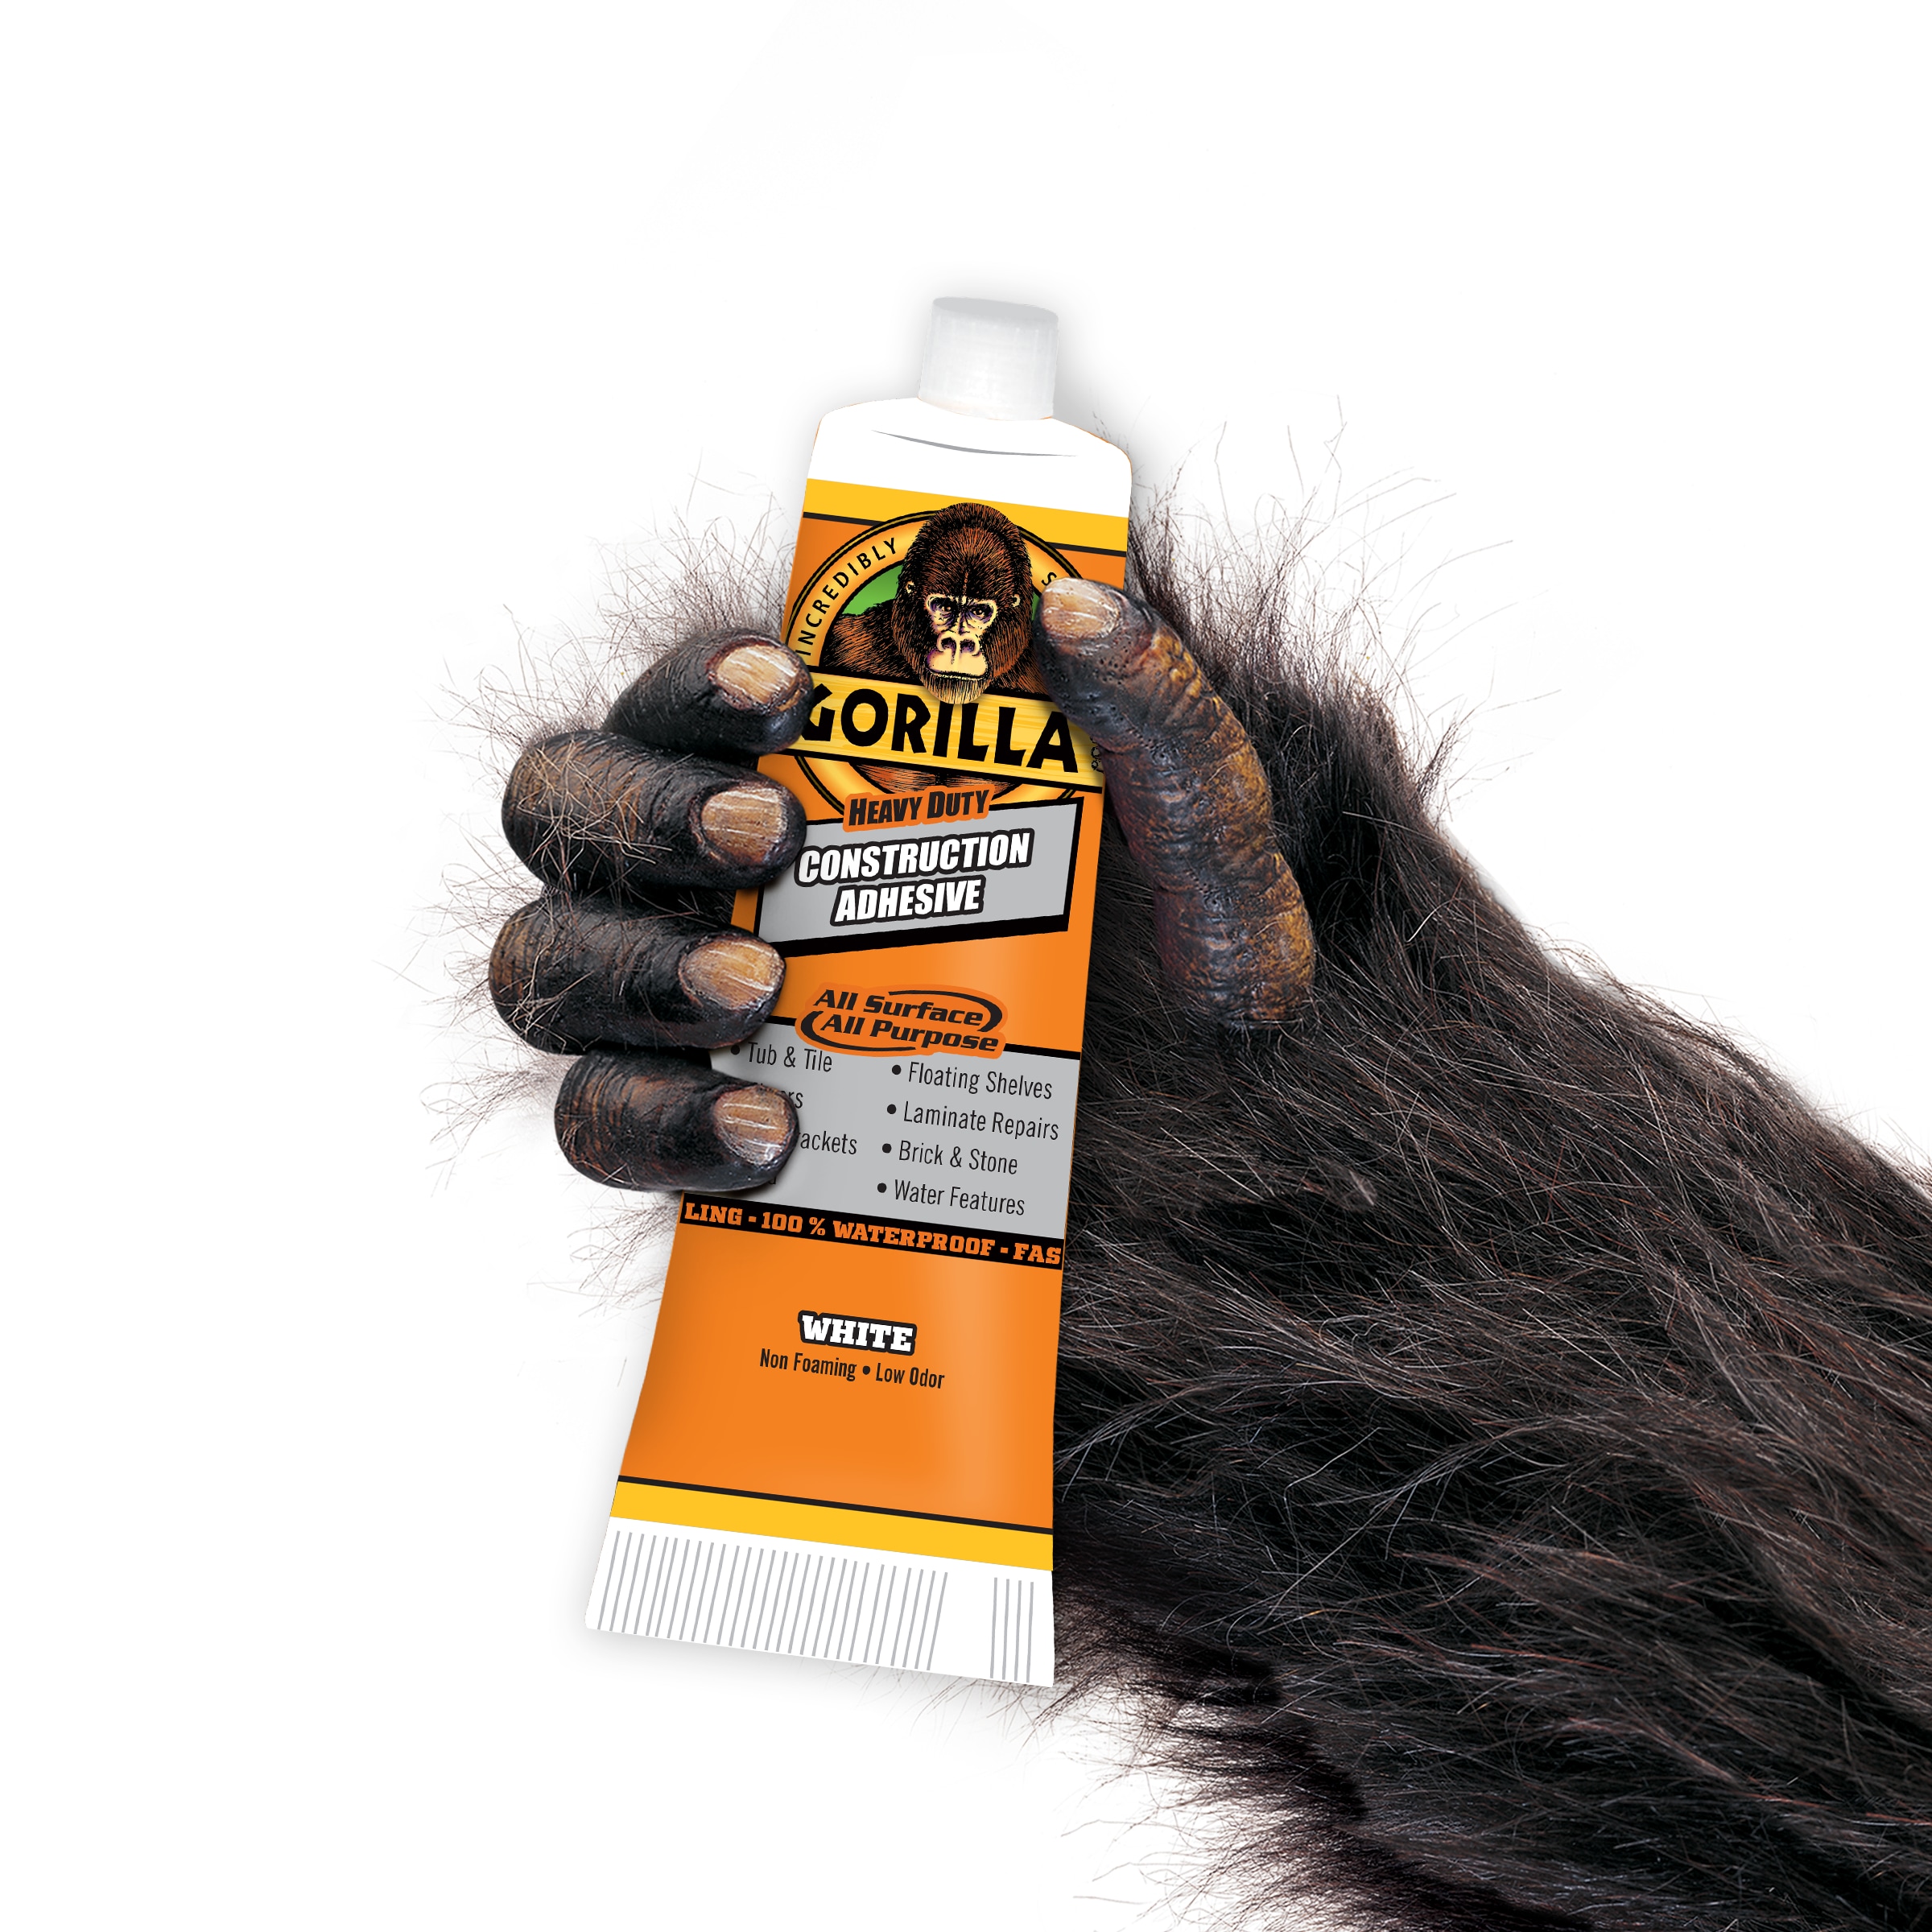 Gorilla Fabric Glue High Strength Adhesive Waterproof Clear, 2.5 fl oz, 2 Pack